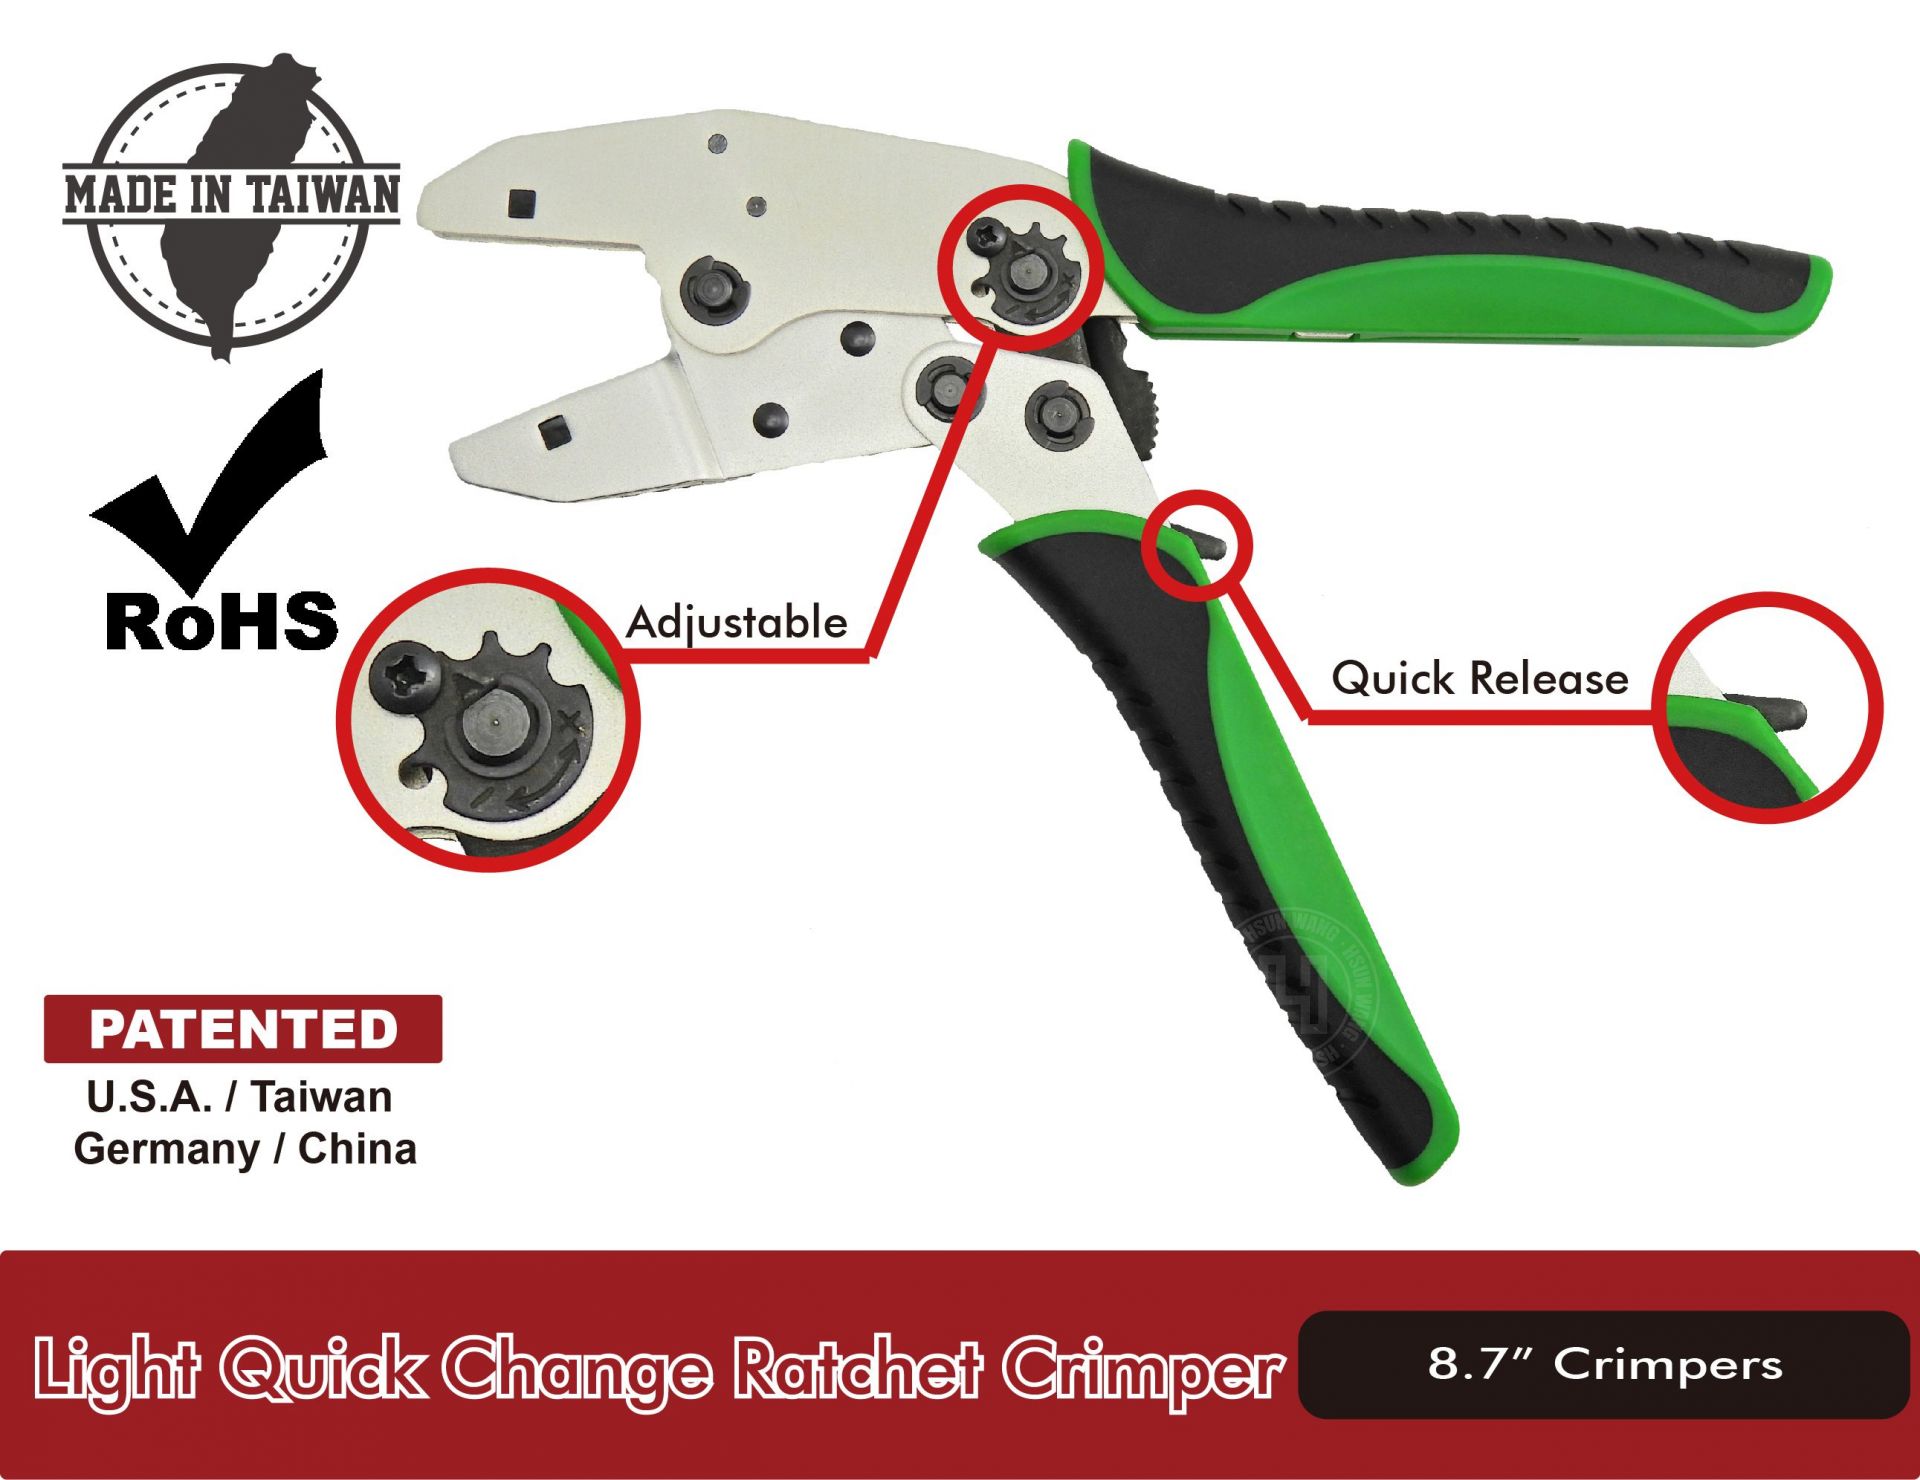 JC50KA22-Jaw-crimp-crimping-crimp tool-crimping tool-crimp wire-ferrule crimp-ratchet crimp-Taiwan Manufacturer-hsunwang-licrim-hsunwang.com
